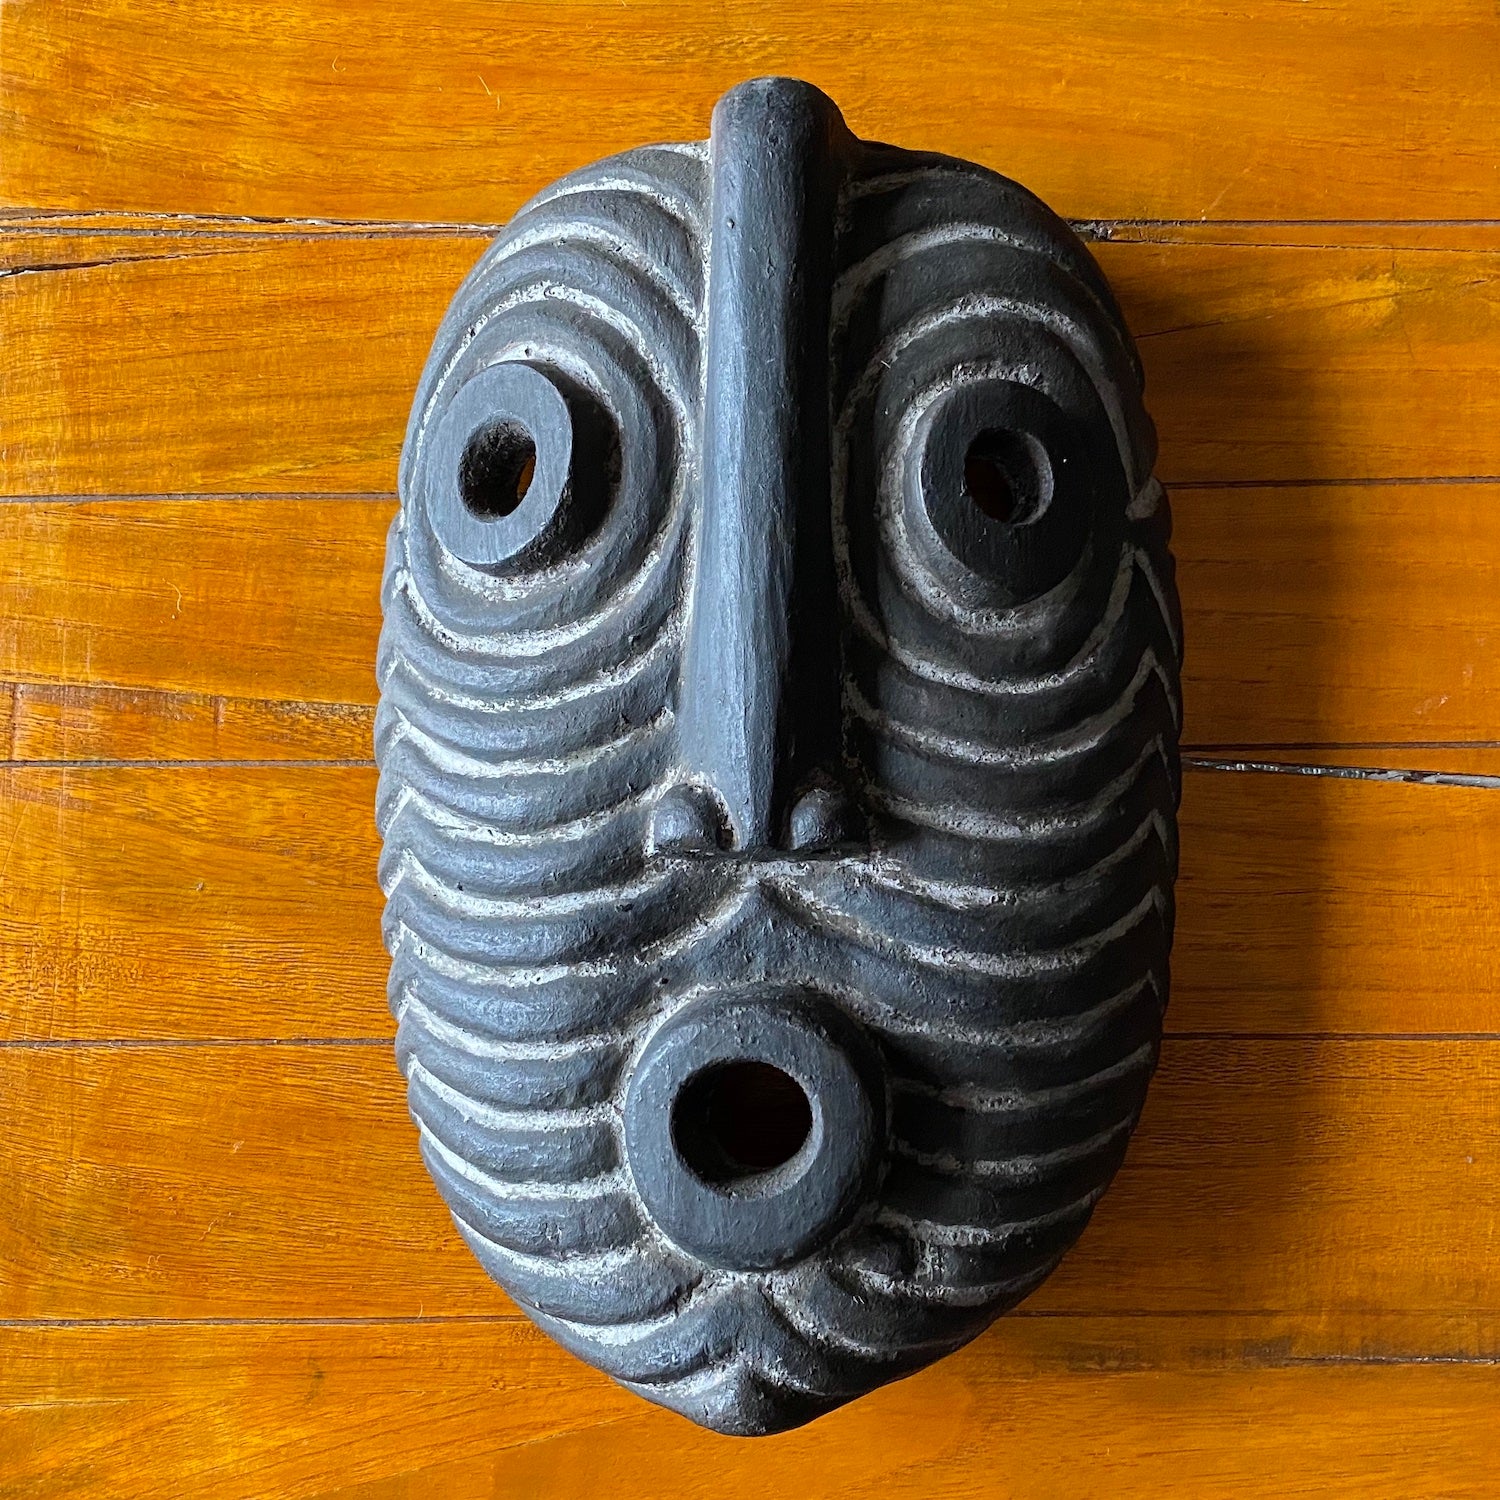 Song mask from Zambezia, Mozambique (1)